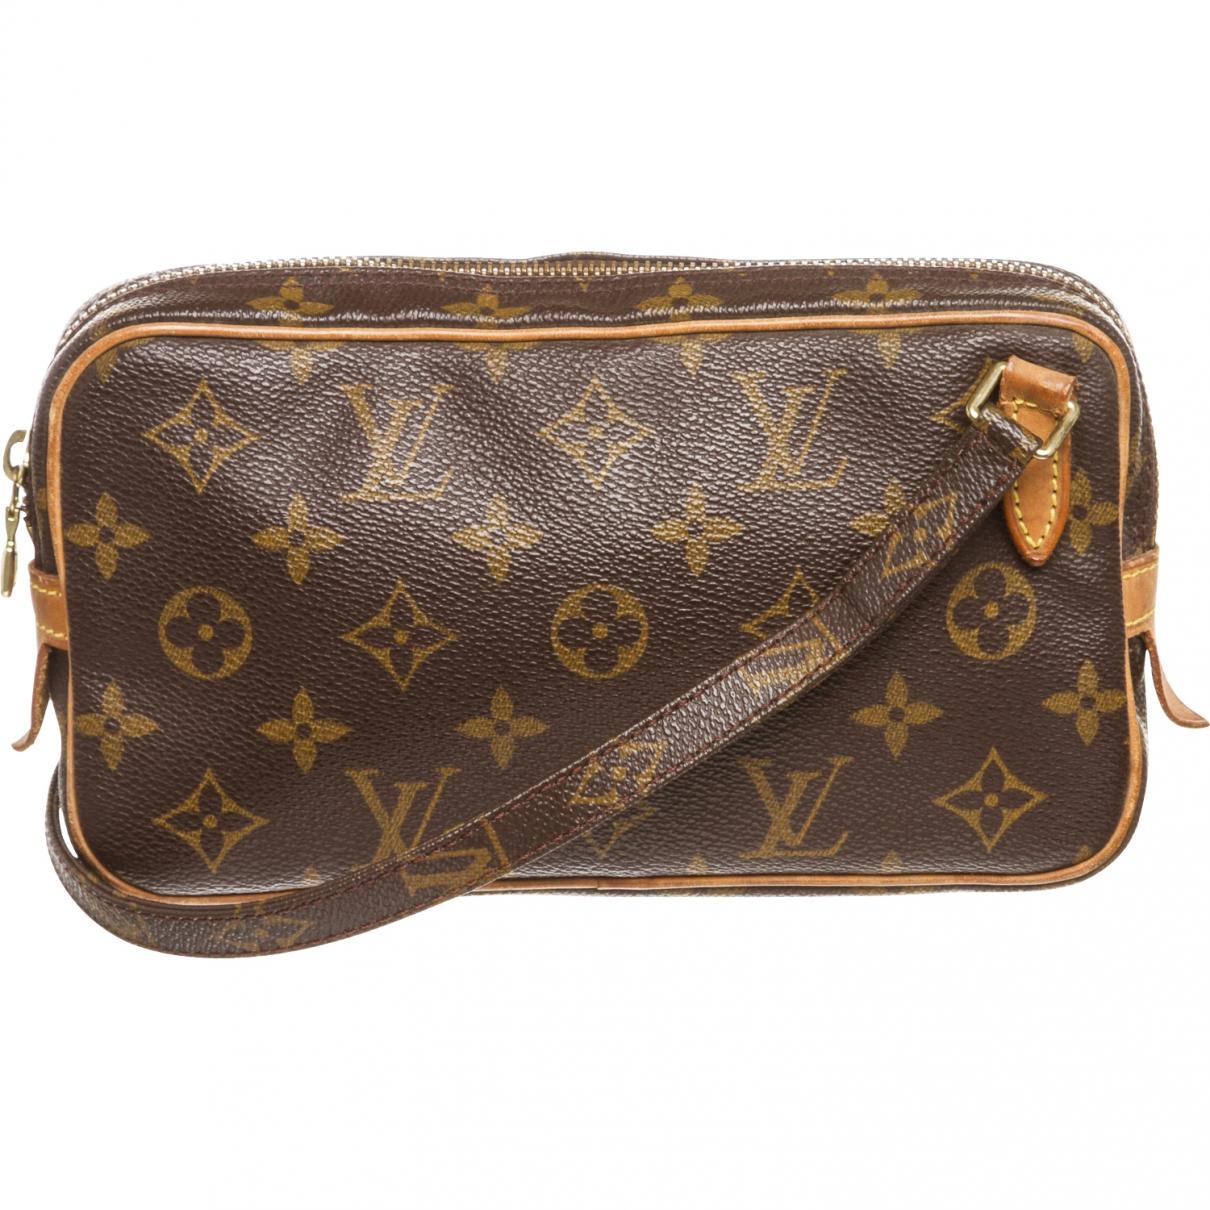 Shop Authentic Louis Vuitton Handbags At Marque Supply Company | SEMA Data Co-op